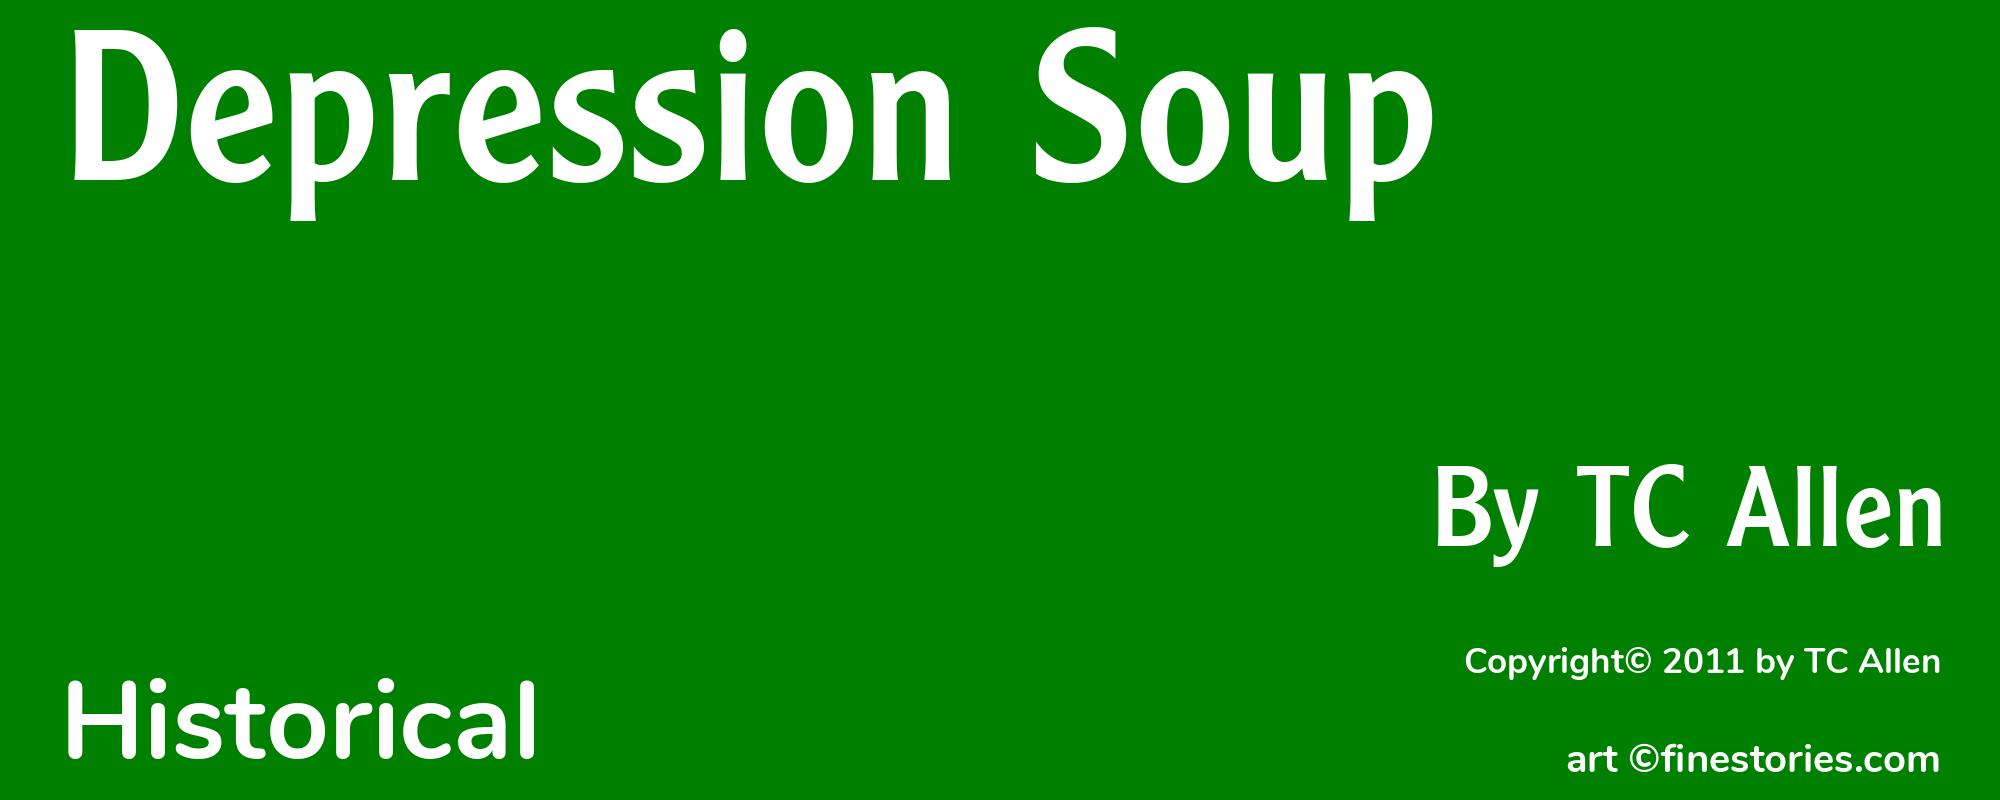 Depression Soup - Cover